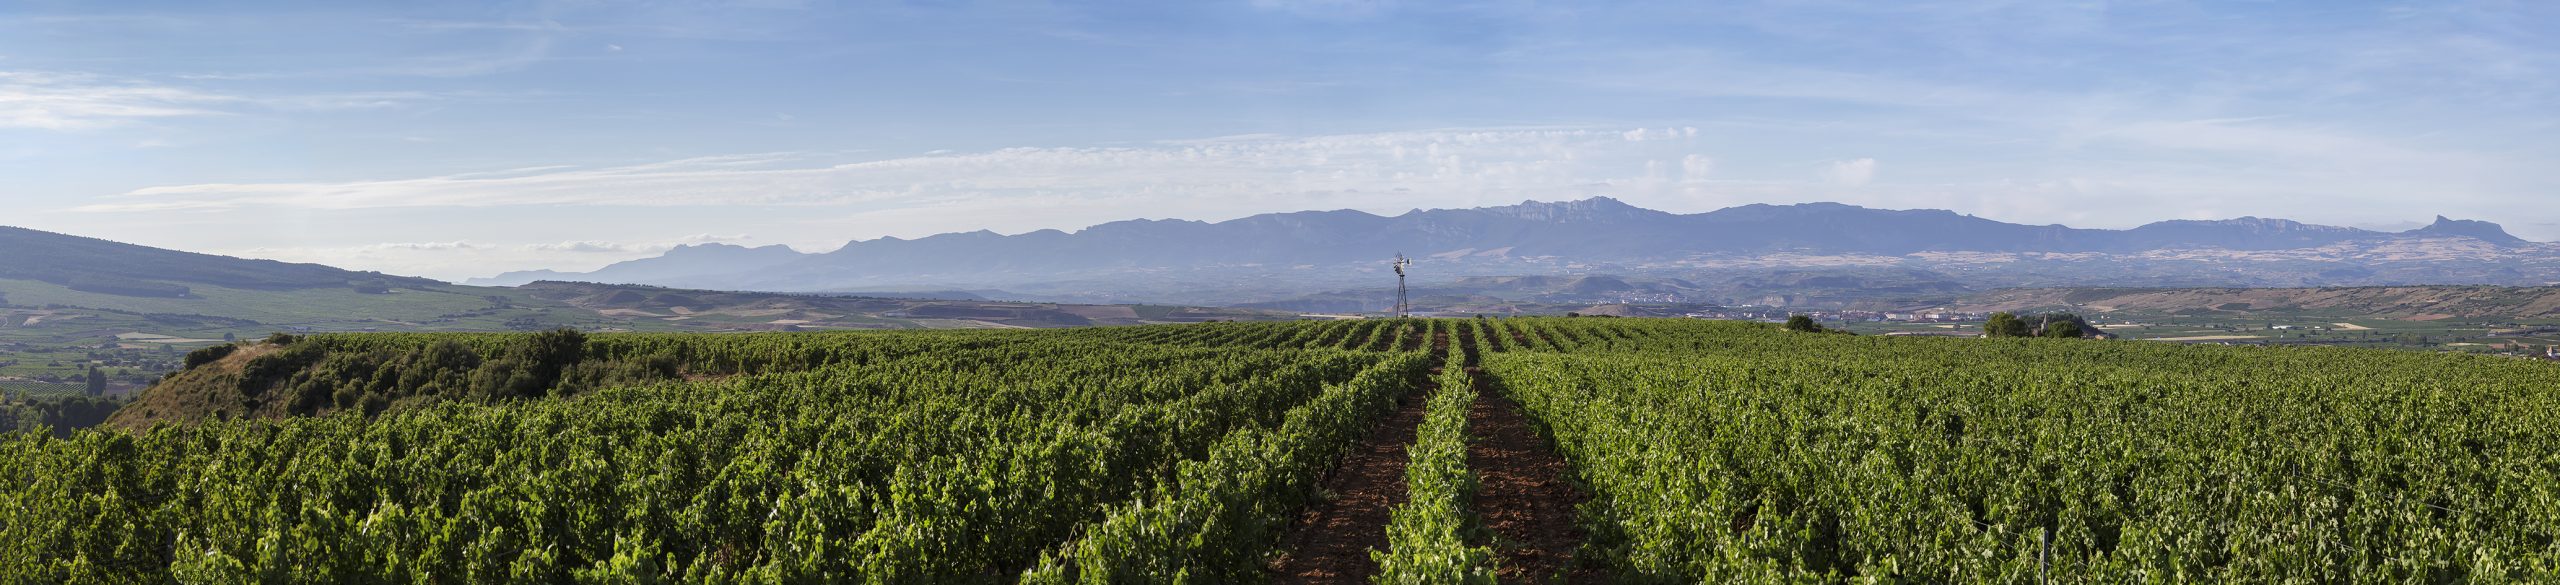 Bodegas Corral · Don Jacobo | Vinos de Rioja y Enoexperiencias | Los Corrales de Moncalvillo